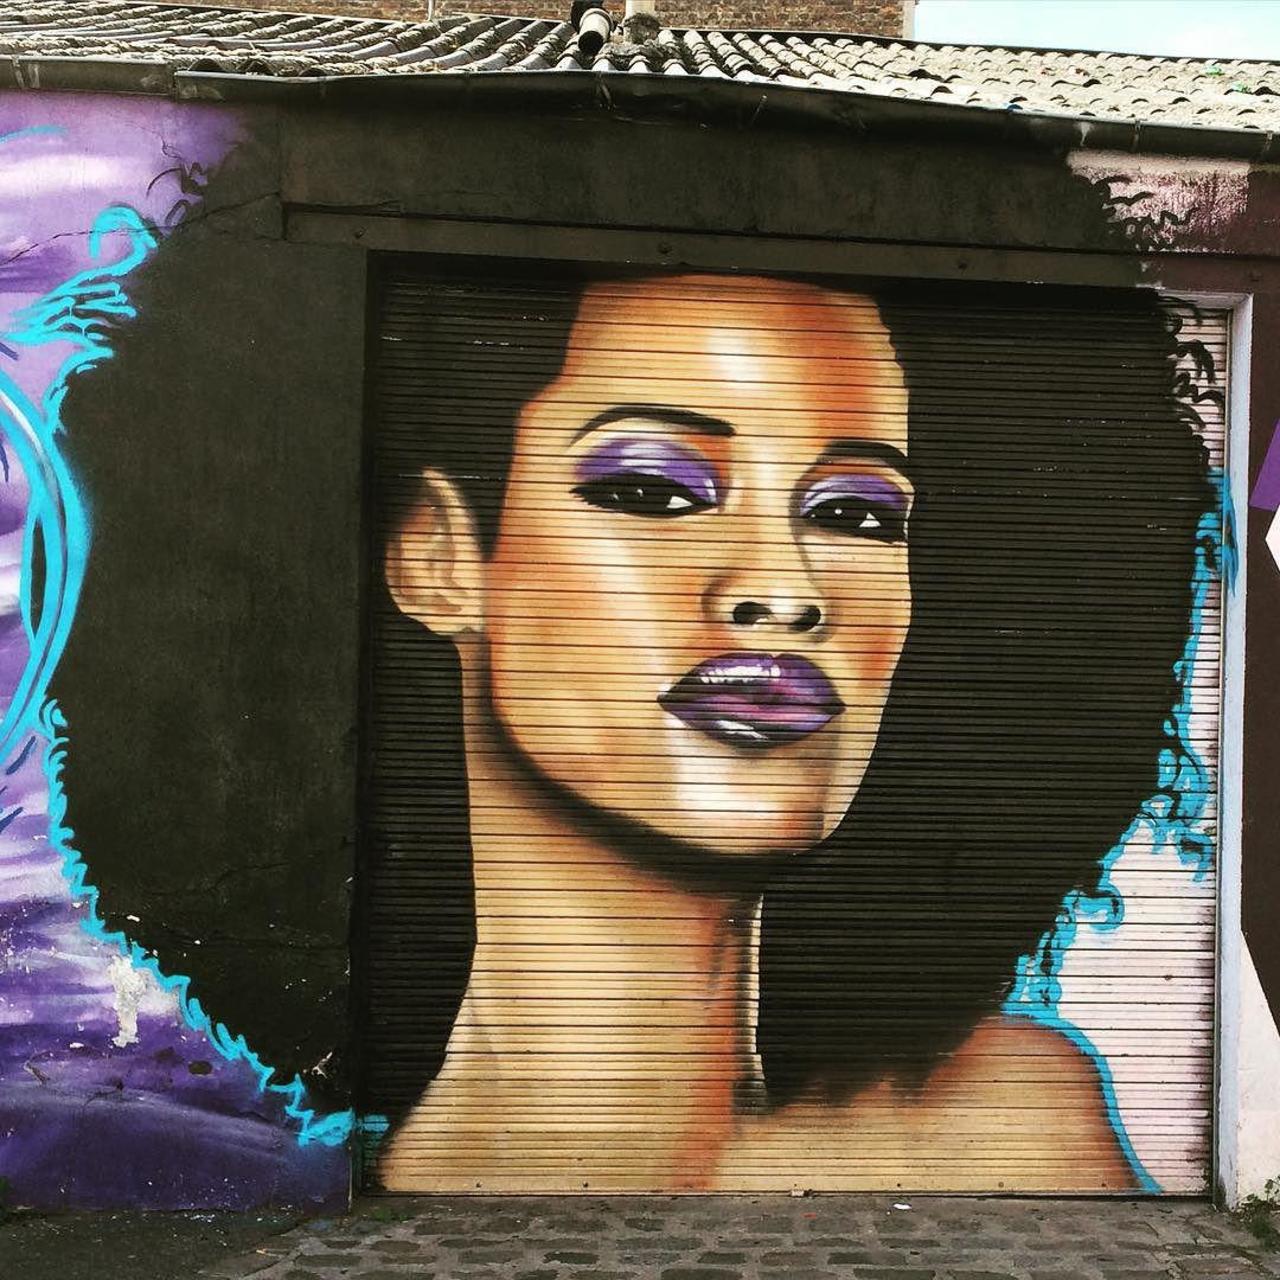 #Paris #graffiti photo by @elricoelmagnifico http://ift.tt/1jvY7J8 #StreetArt http://t.co/dYHSkBO4In